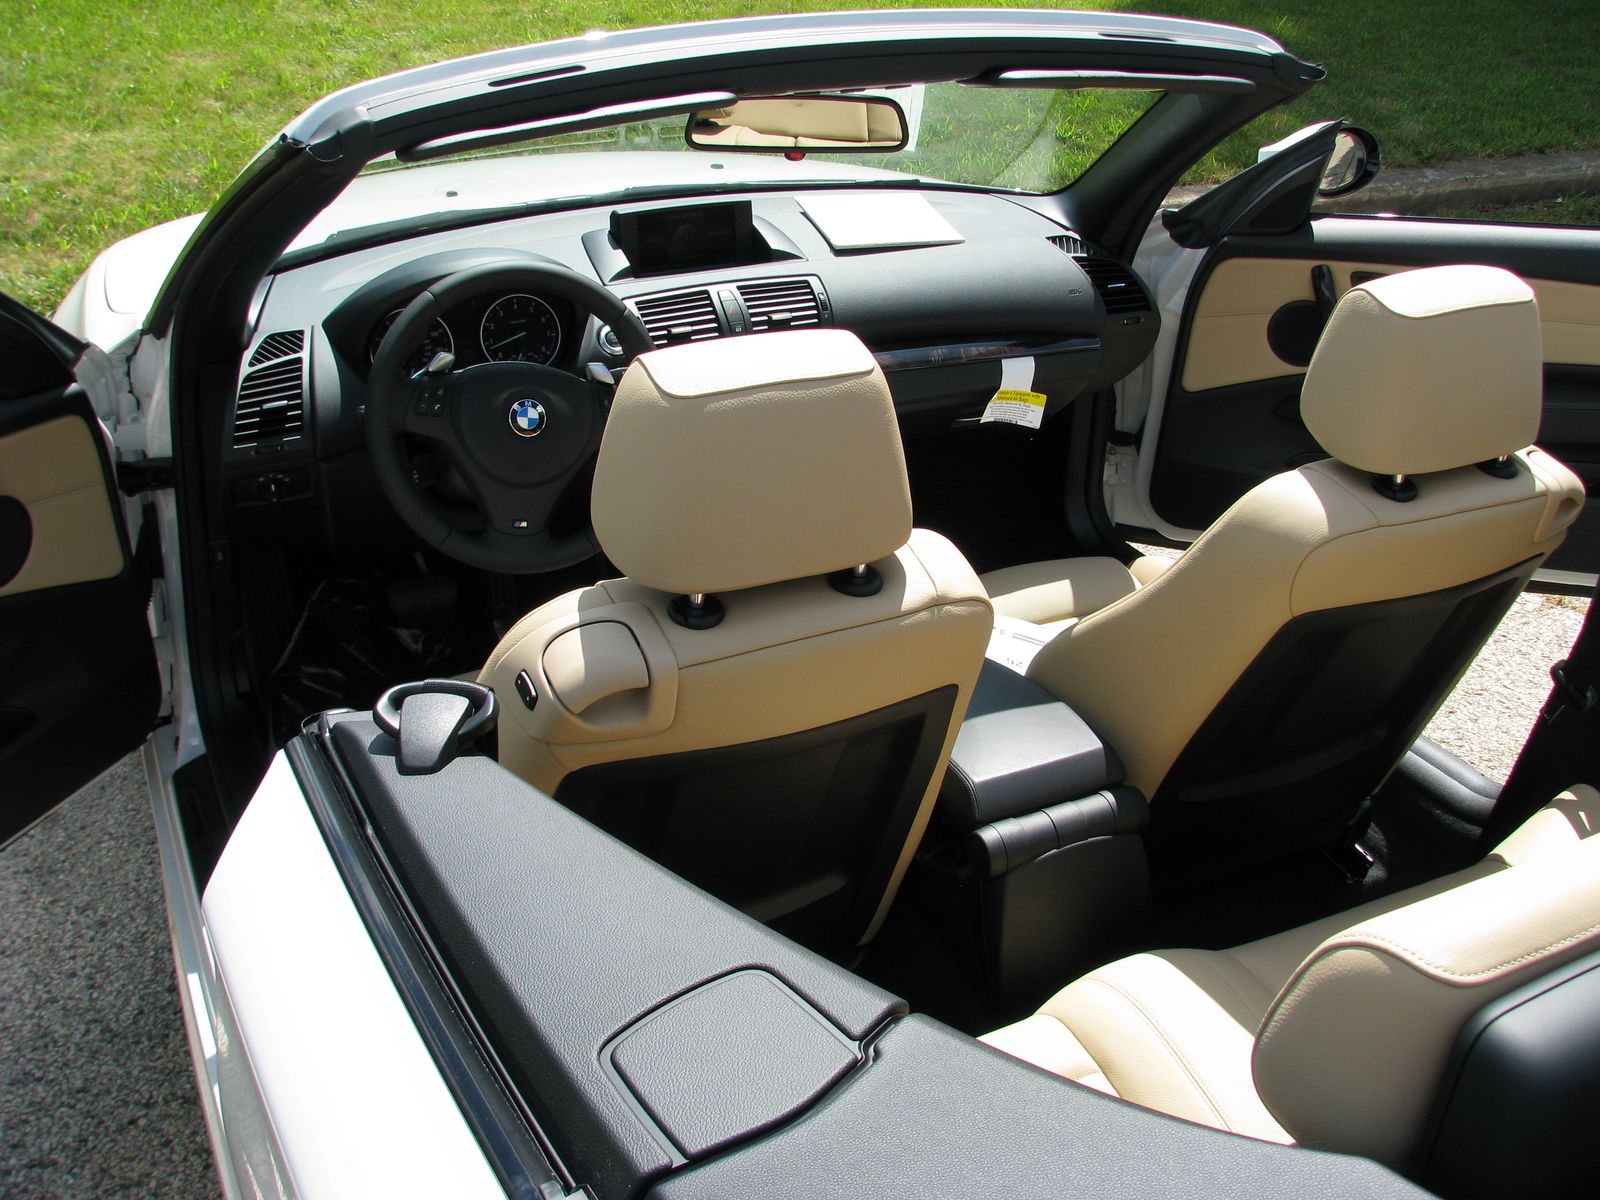 Test Drive: BMW 135i Convertible